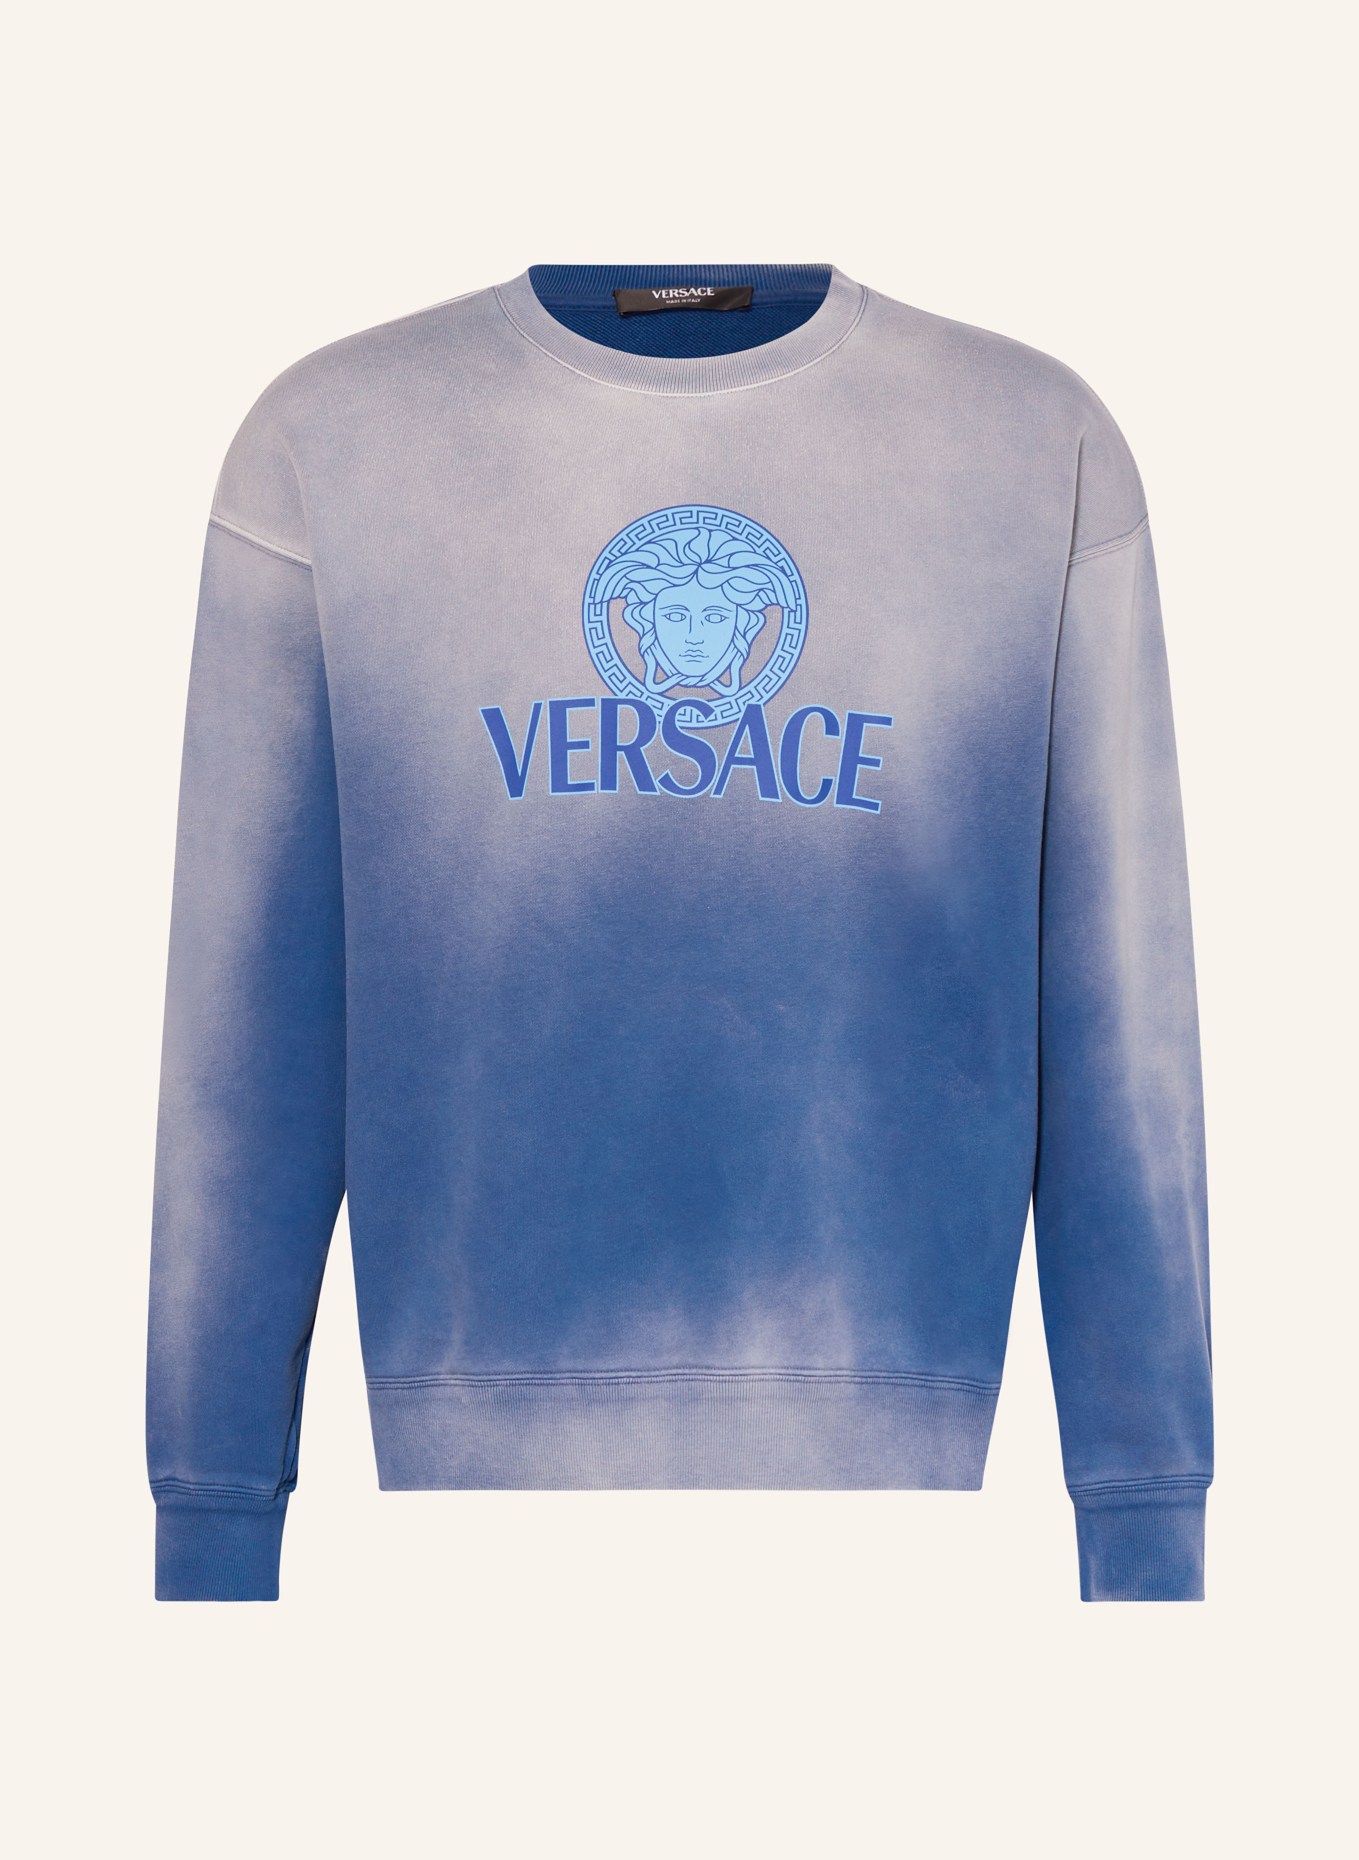 VERSACE Sweatshirt, Farbe: BLAU (Bild 1)